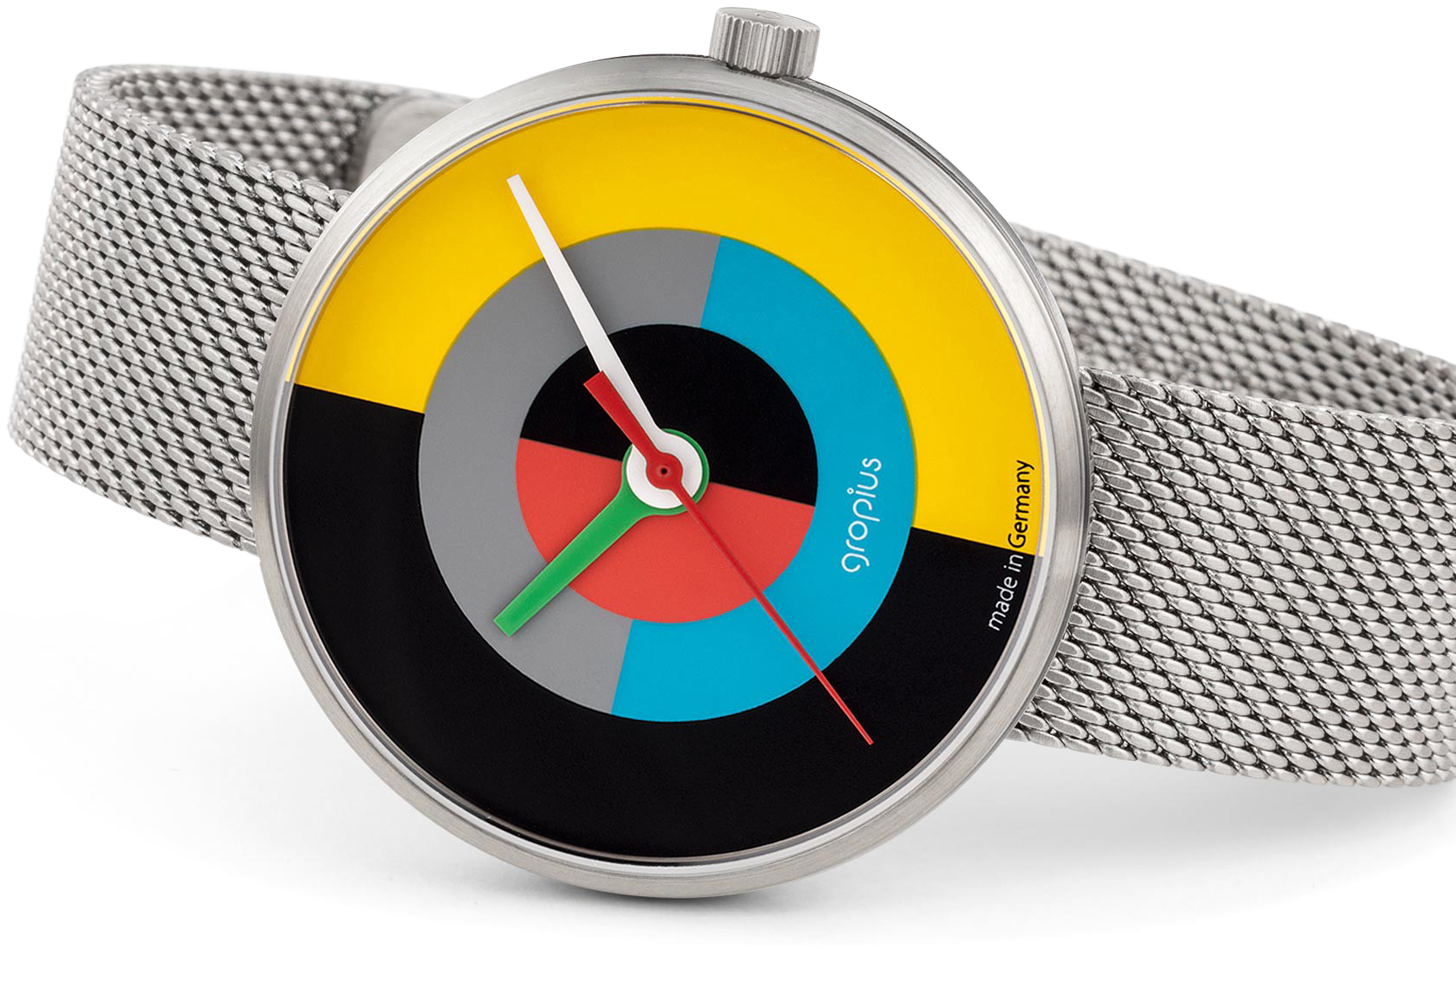 Watches be to Bauhaus Movement Timeless. Bauhaus Made Collection.